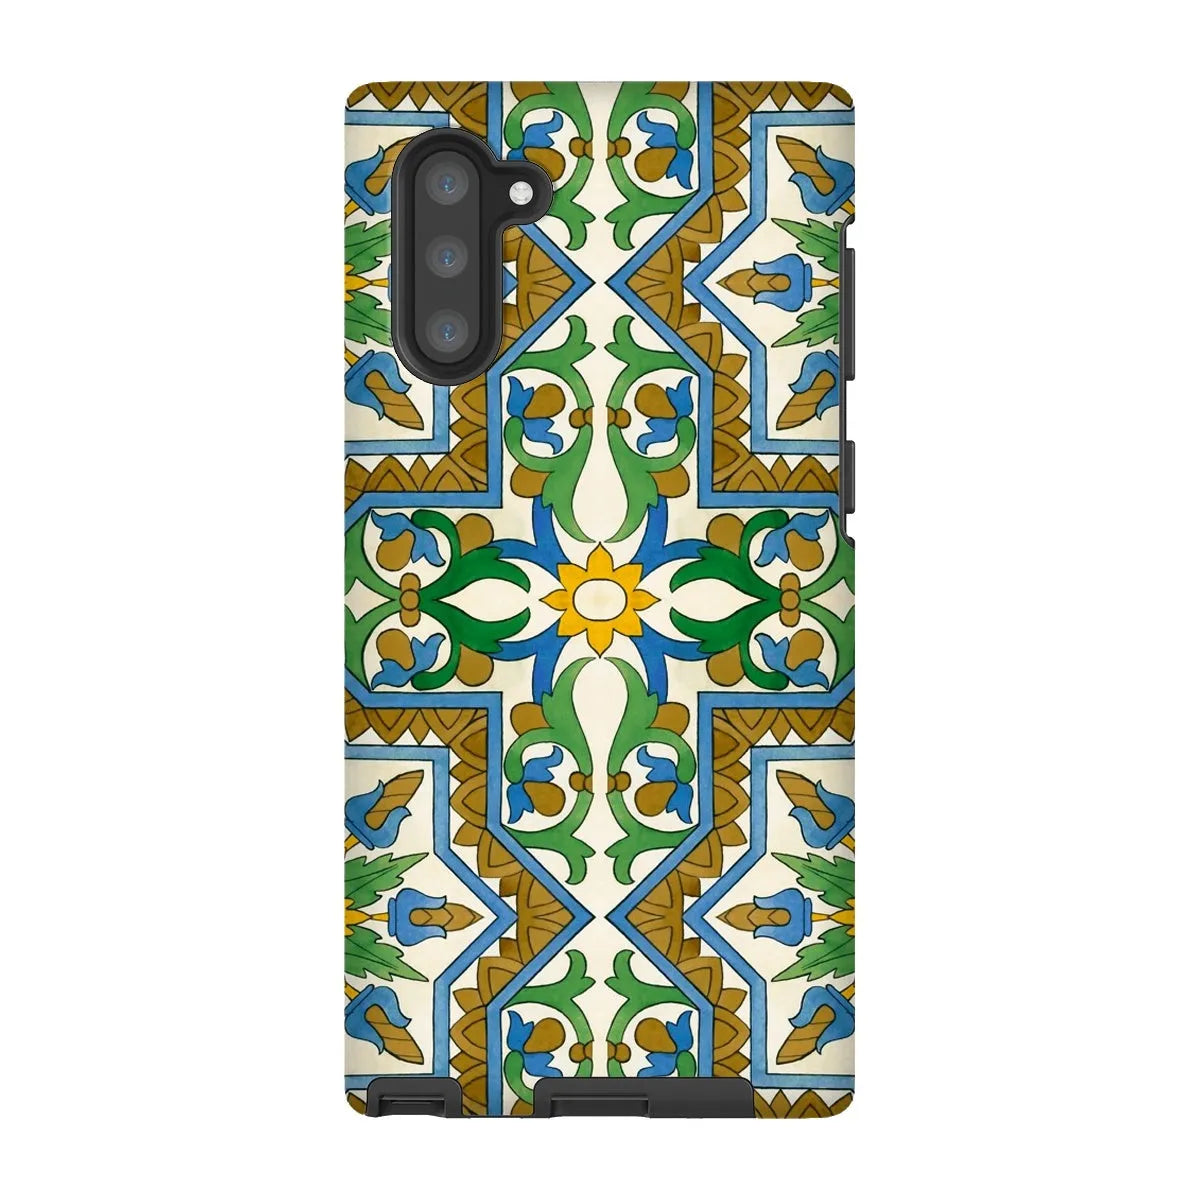 Moreish Moorish - Spanish Aesthetic Pattern Phone Case - Samsung Galaxy Note 10 / Matte - Mobile Phone Cases